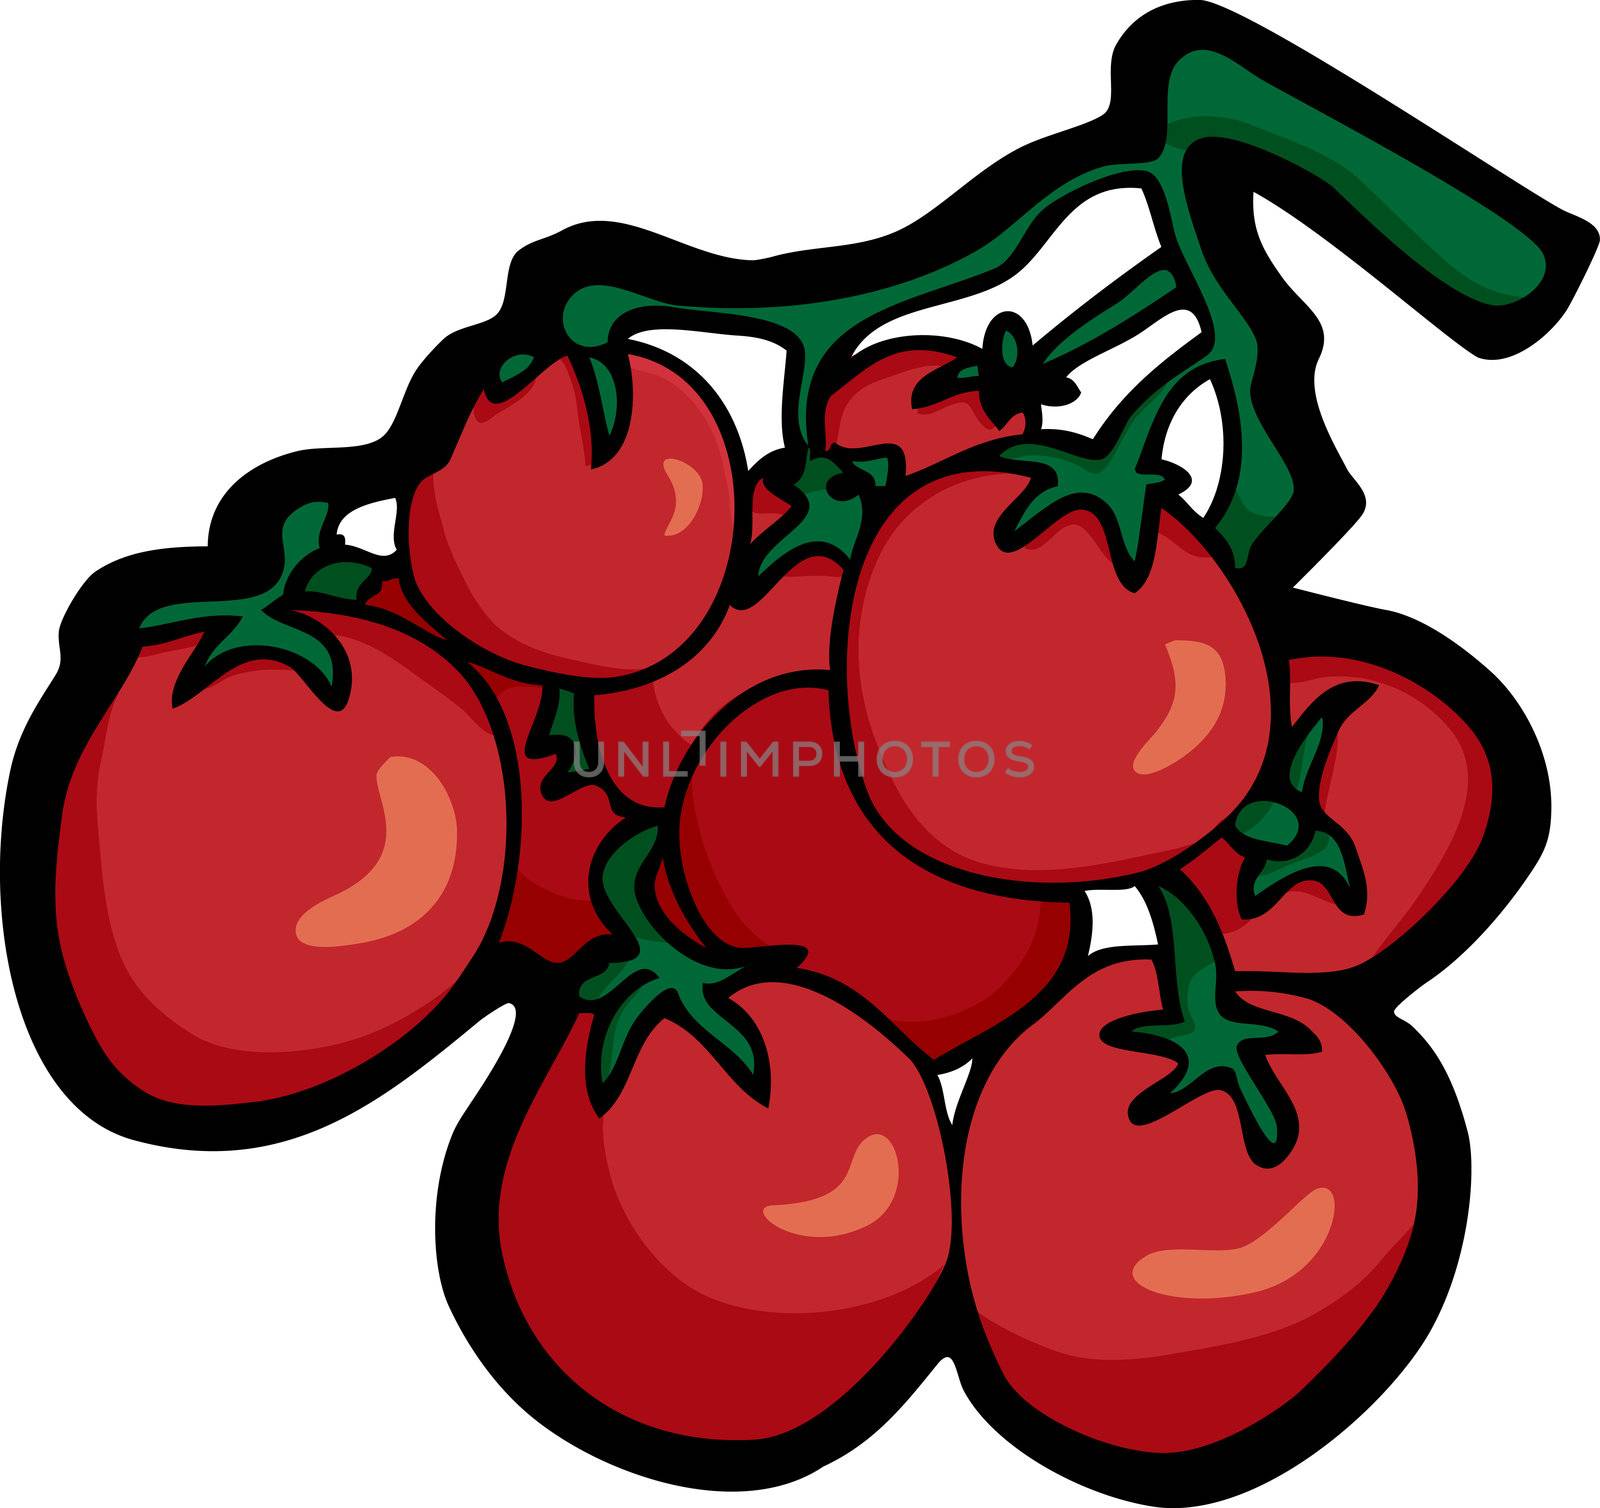 Stem full of ripe red cherry tomatoes